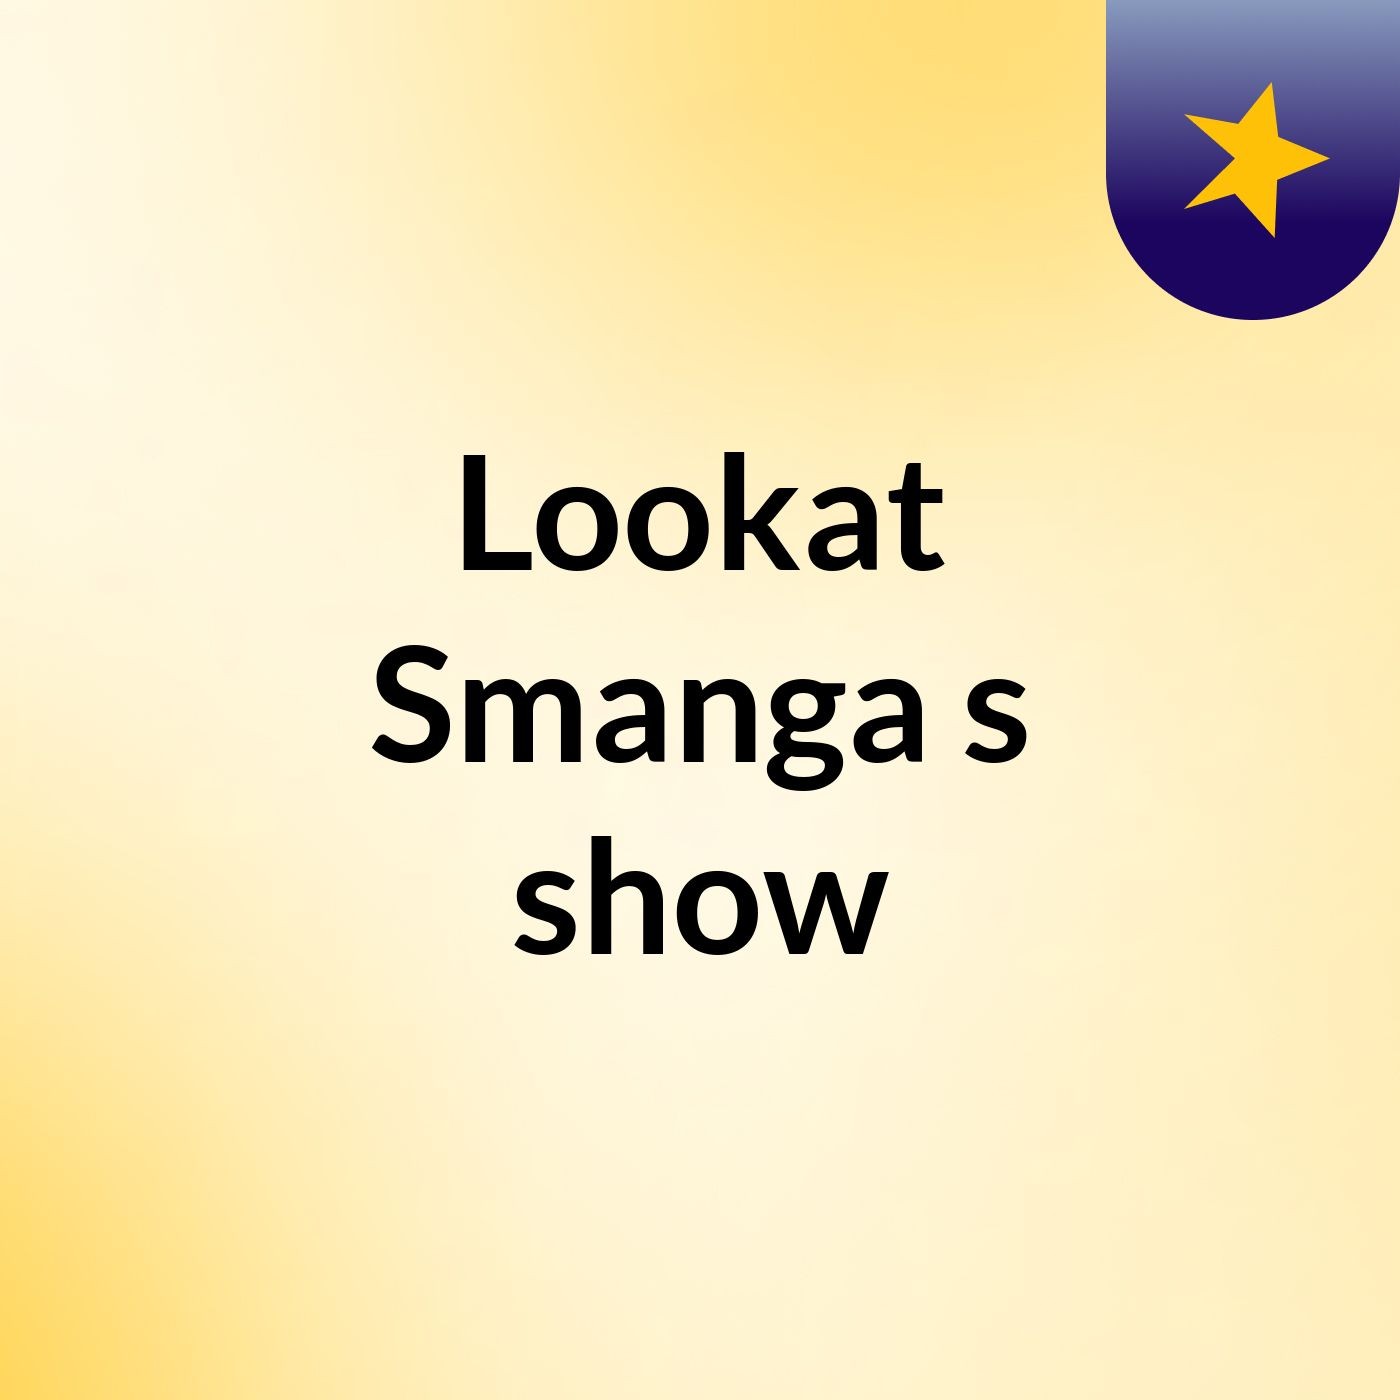 Lookat Smanga's show